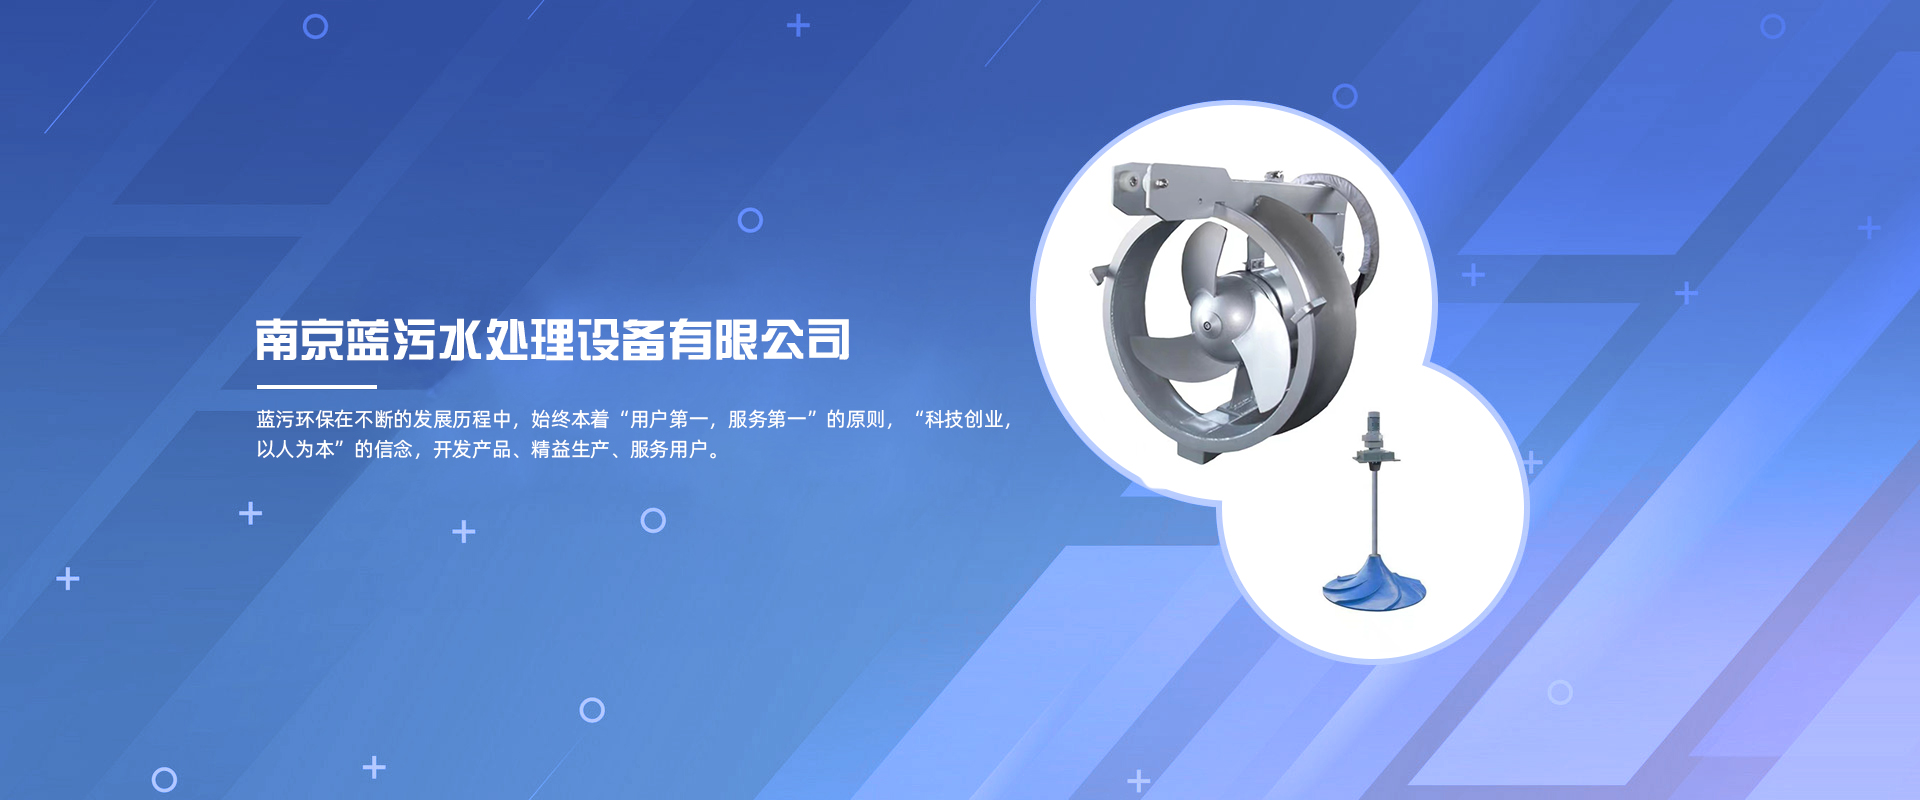 Nantong Jinhai Anti-Corrosion Co., Ltd.-南京藍污水處理設備從事有砂石分離機、潛水攪拌器，在砂石分離機和潛水攪拌器我們的設備技術成熟服務好，為許多污水處理廠家提供砂石分離機、潛水攪拌器并得到認可